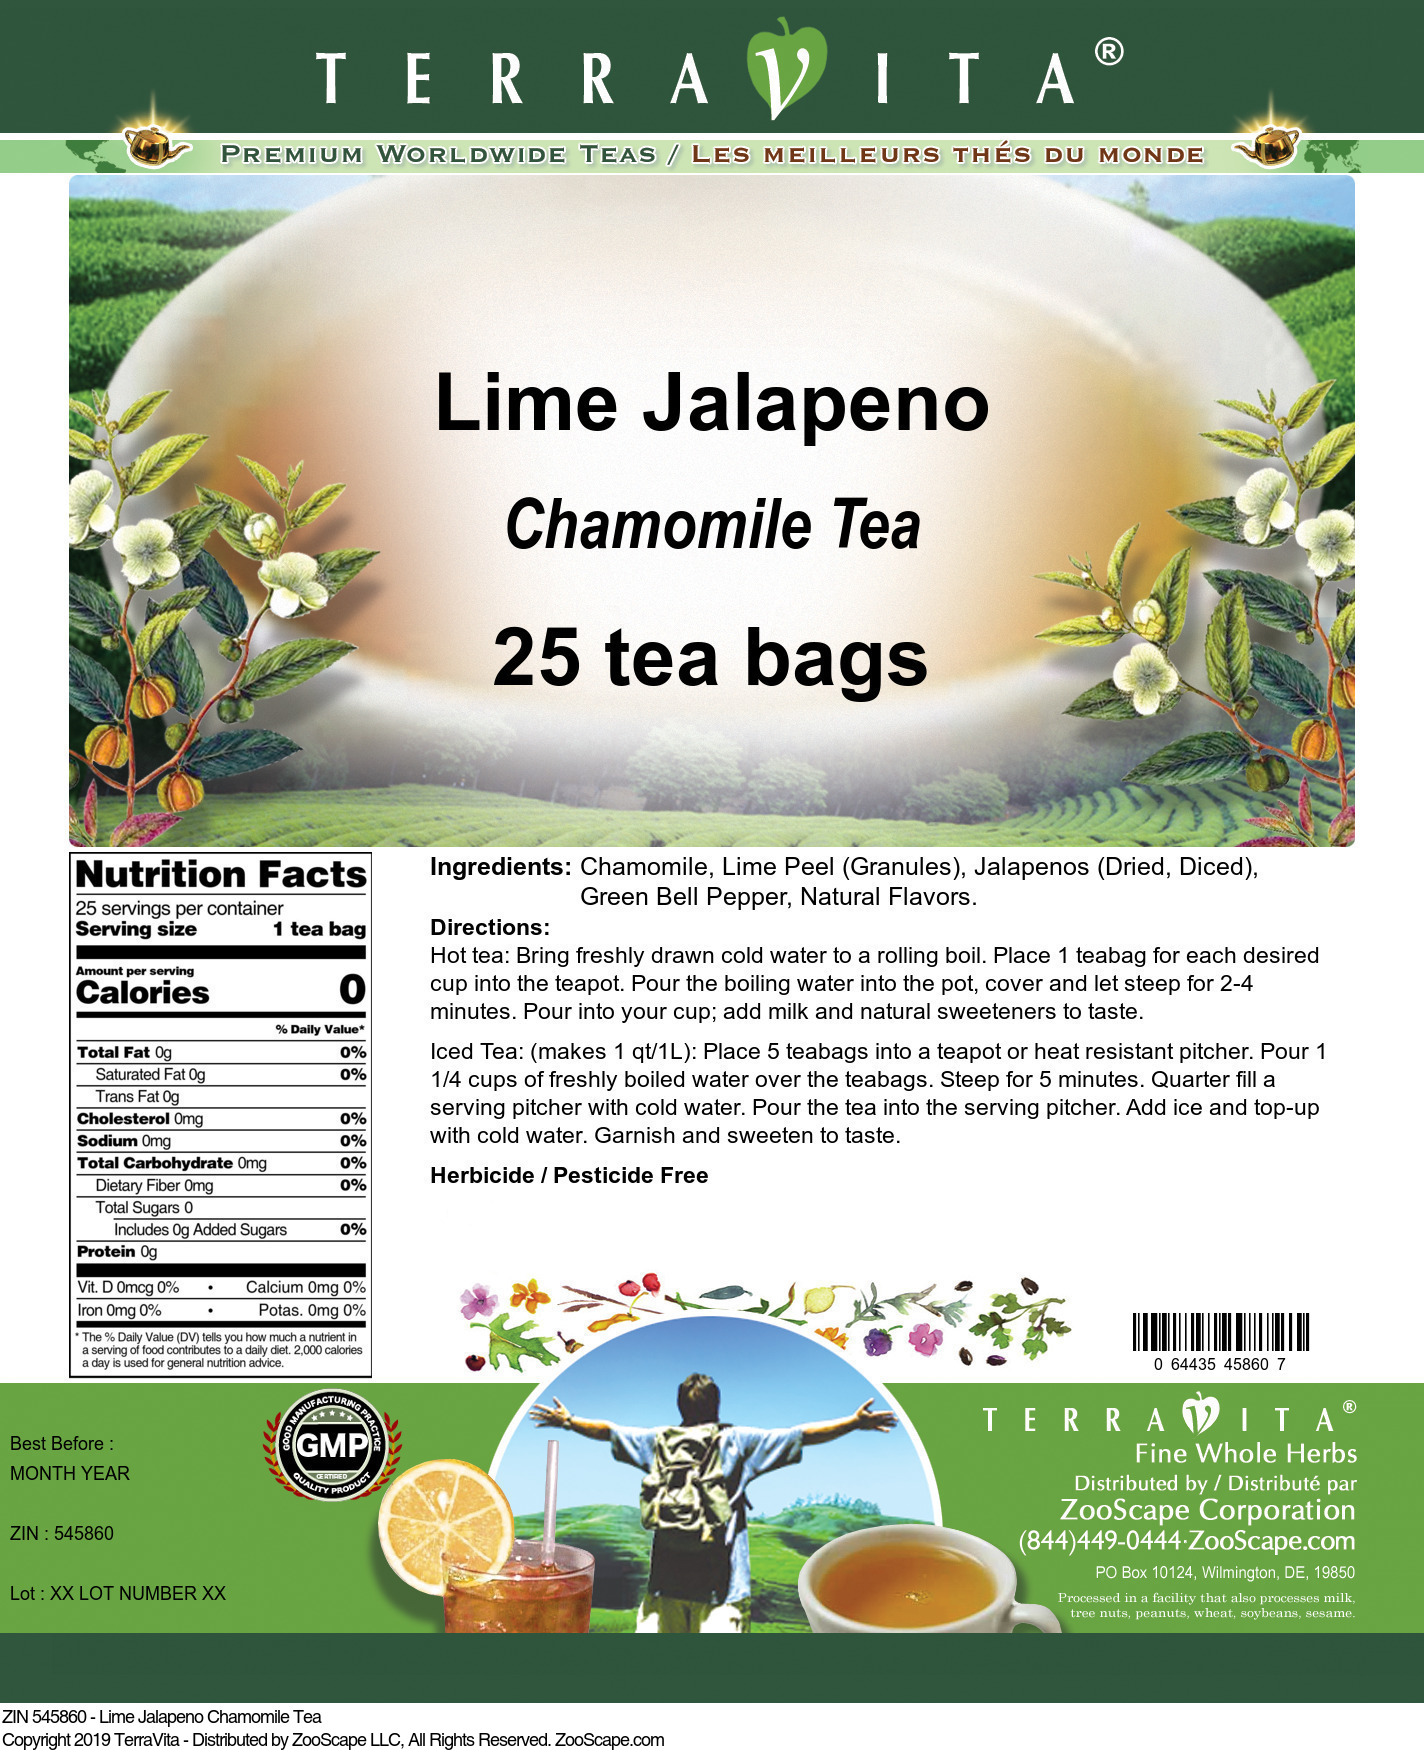 Lime Jalapeno Chamomile Tea - Label